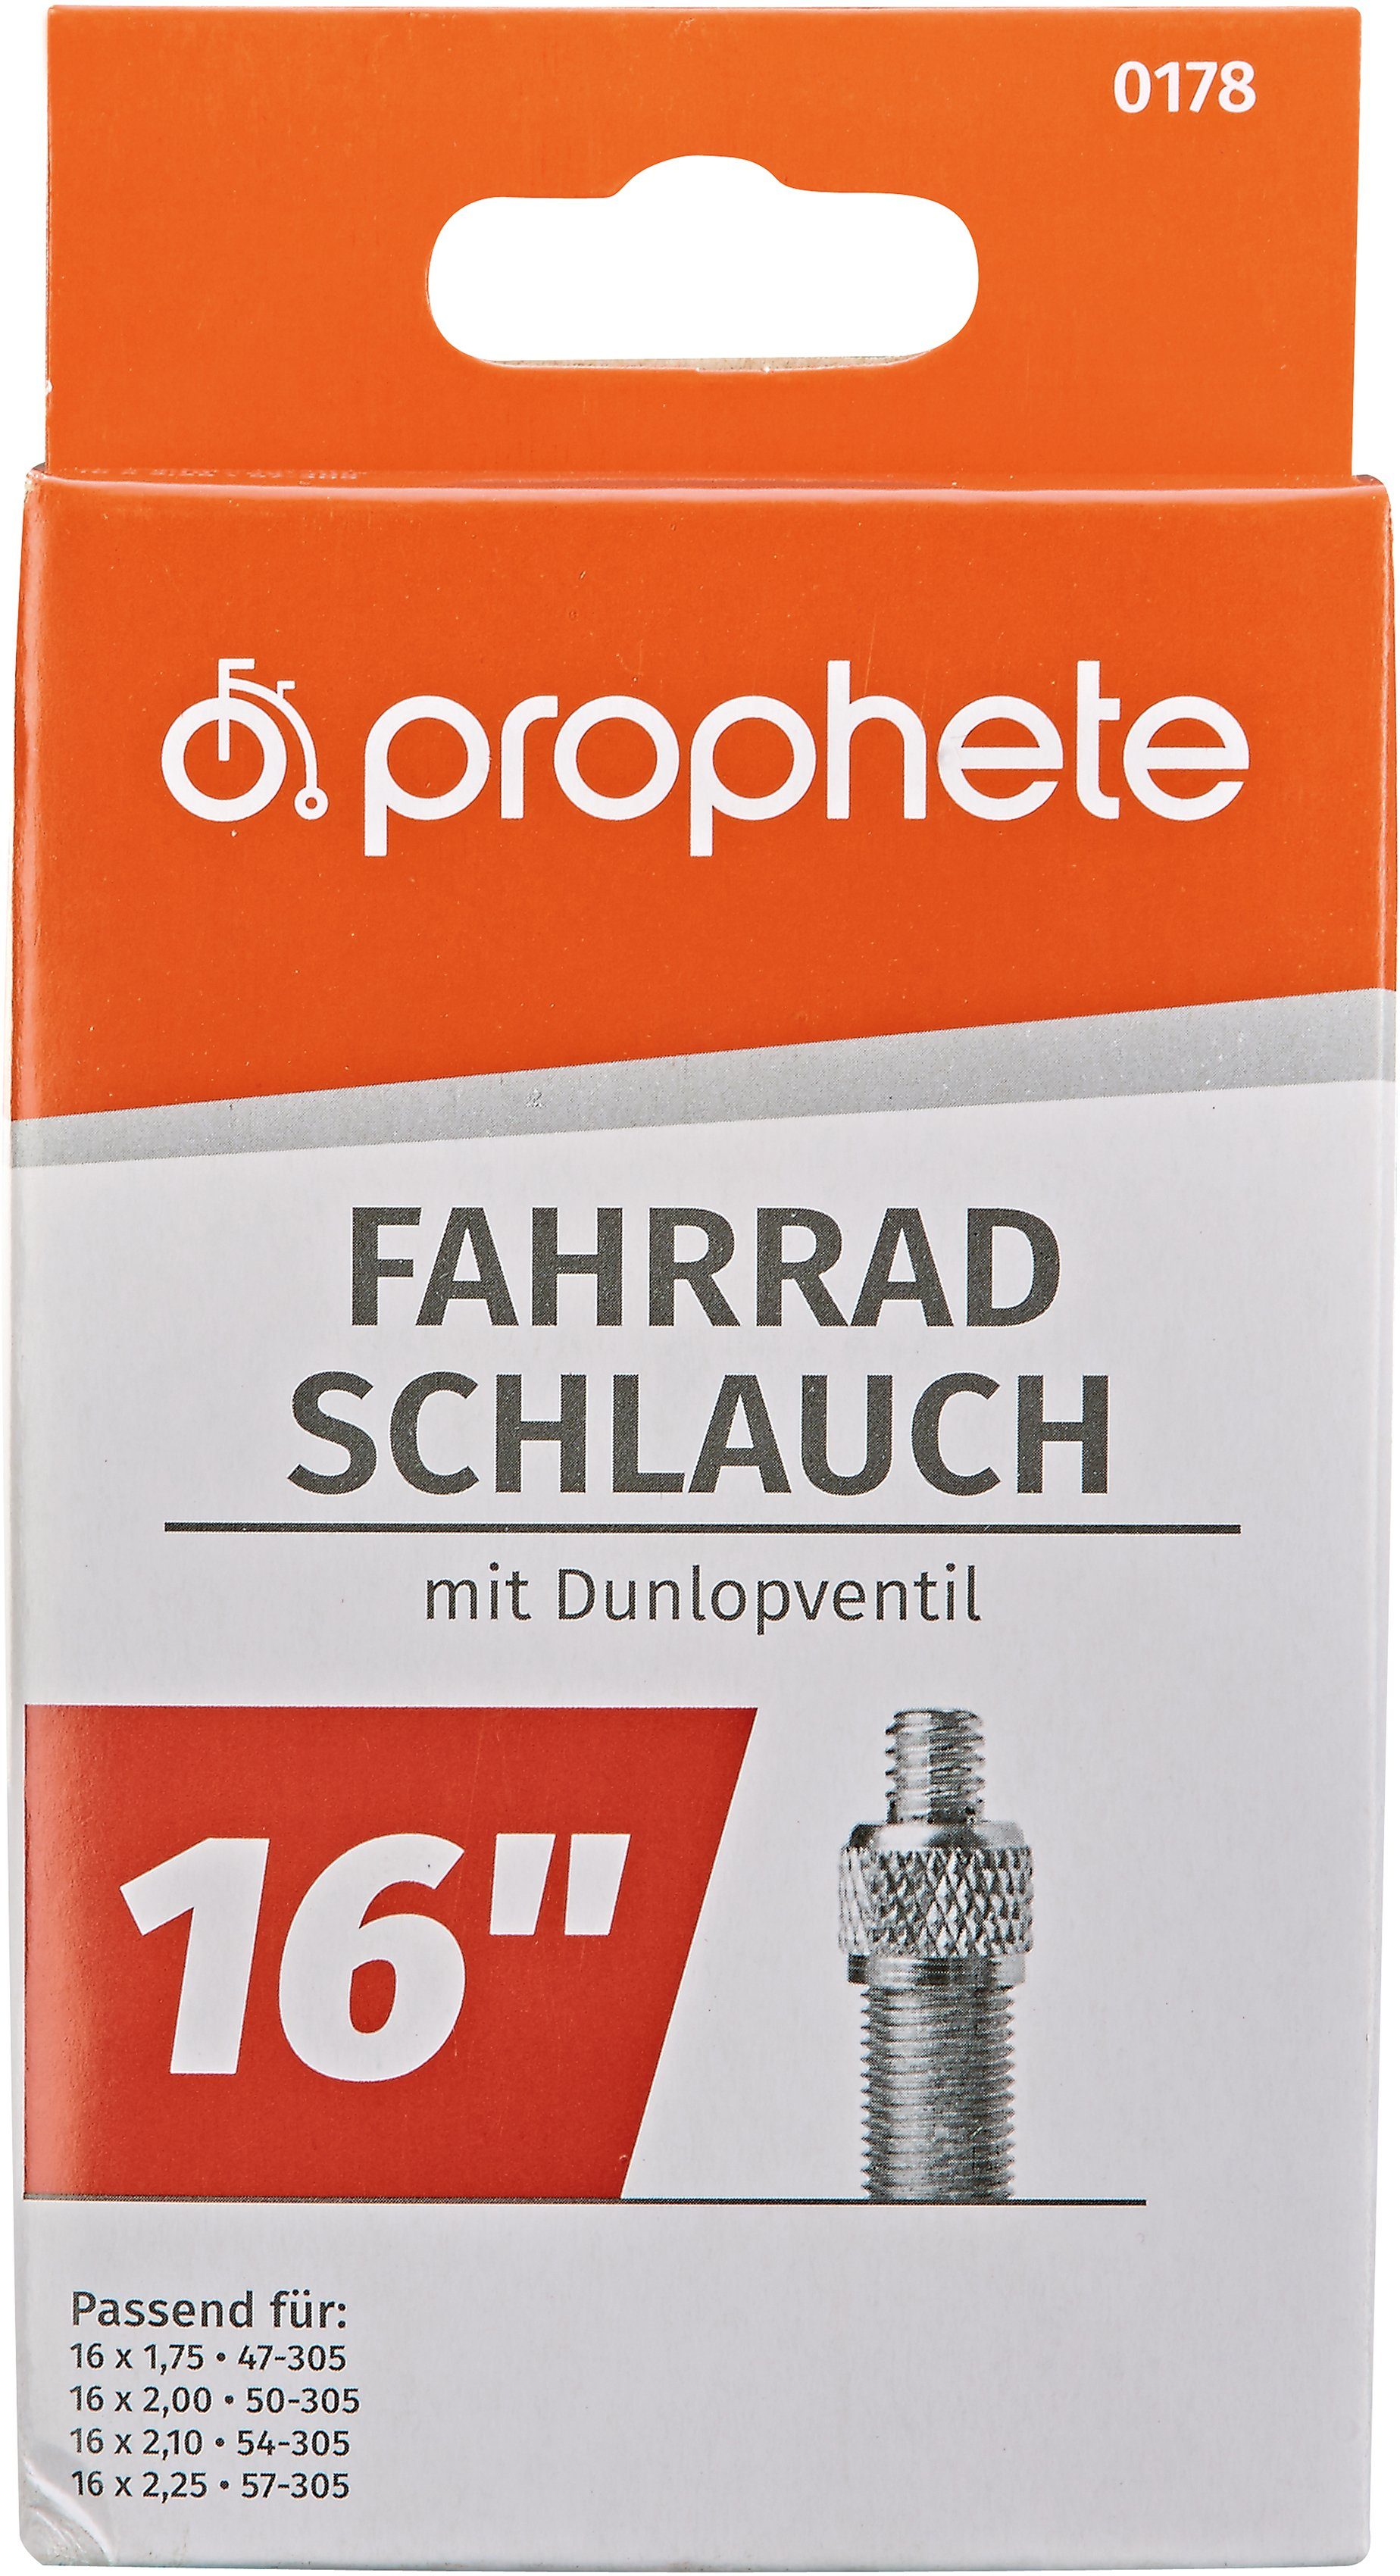 Prophete Fahrradschlauch Fahrradschlauch, 16 Zoll cm) (40,64